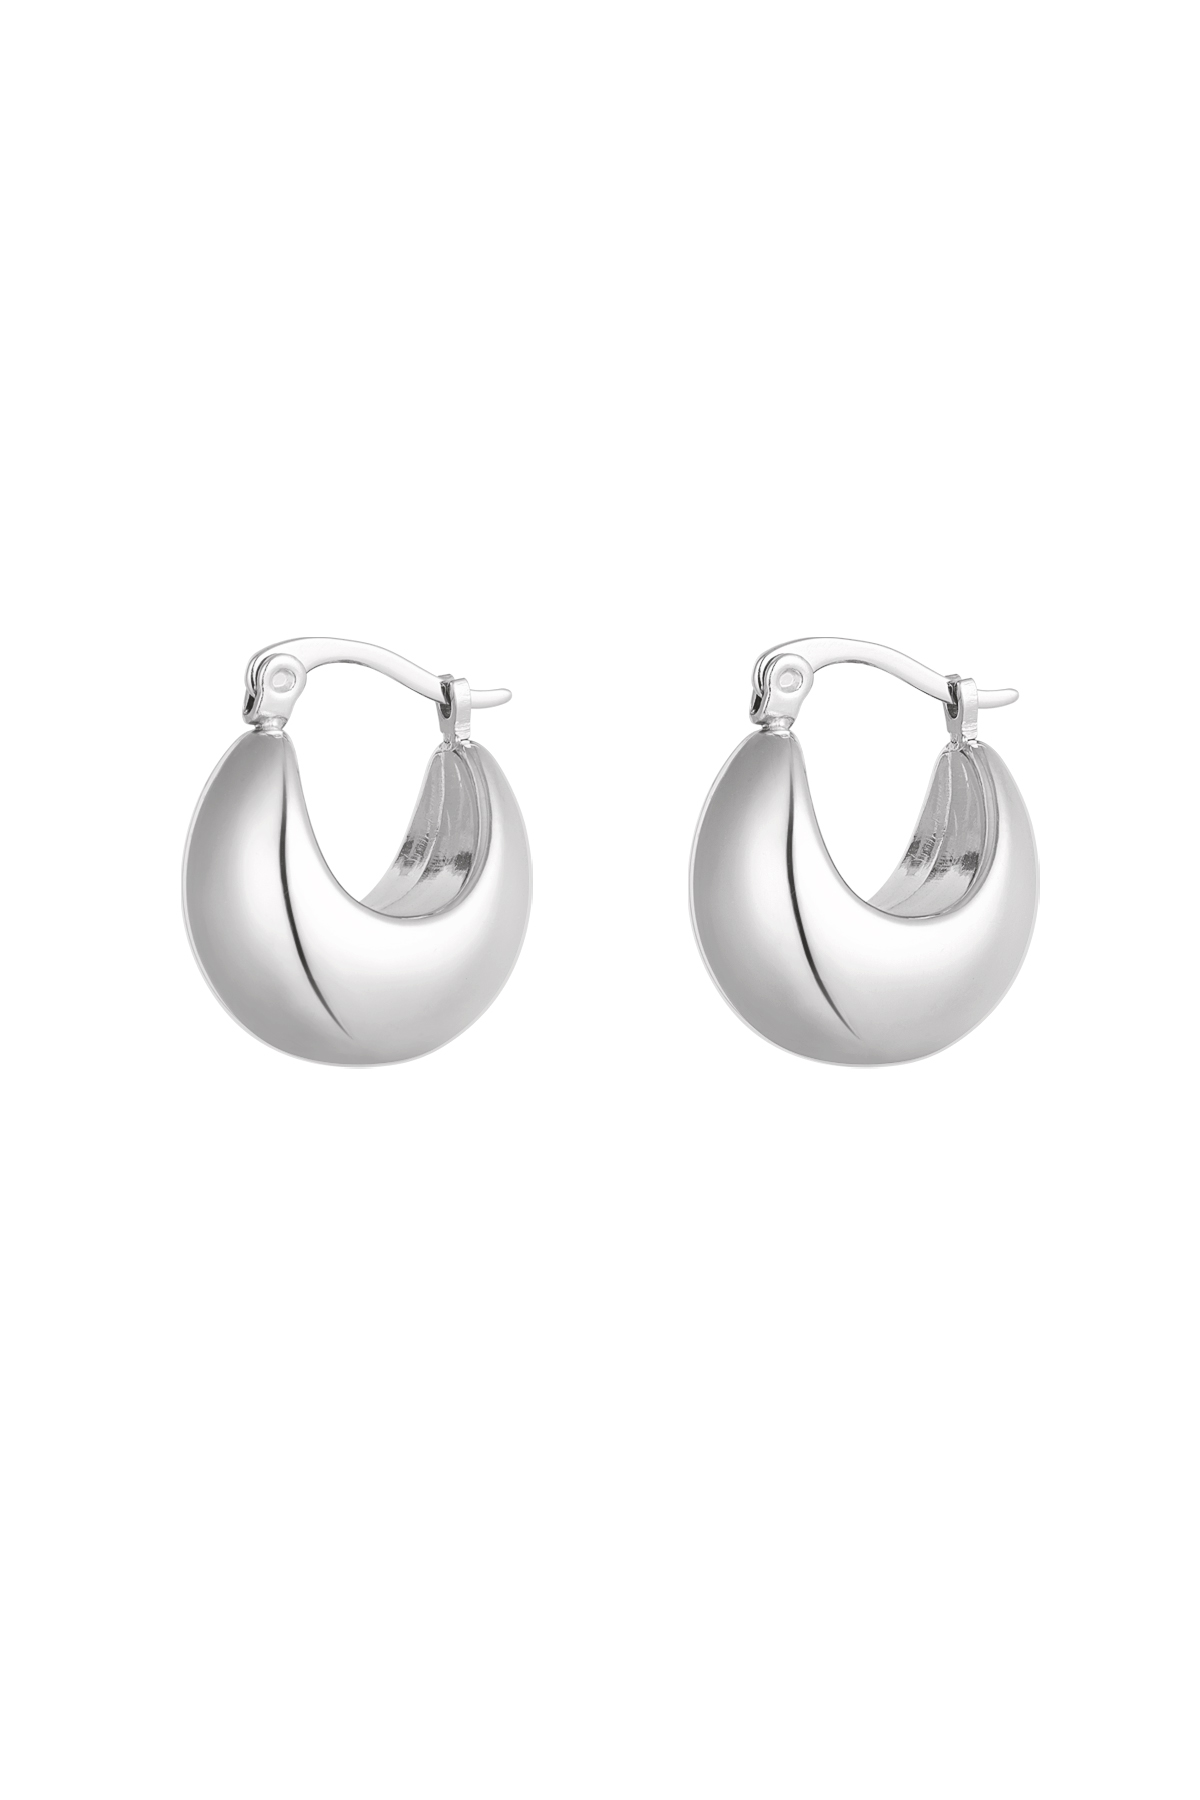 Chunky crescent moon mini earrings - silver h5 